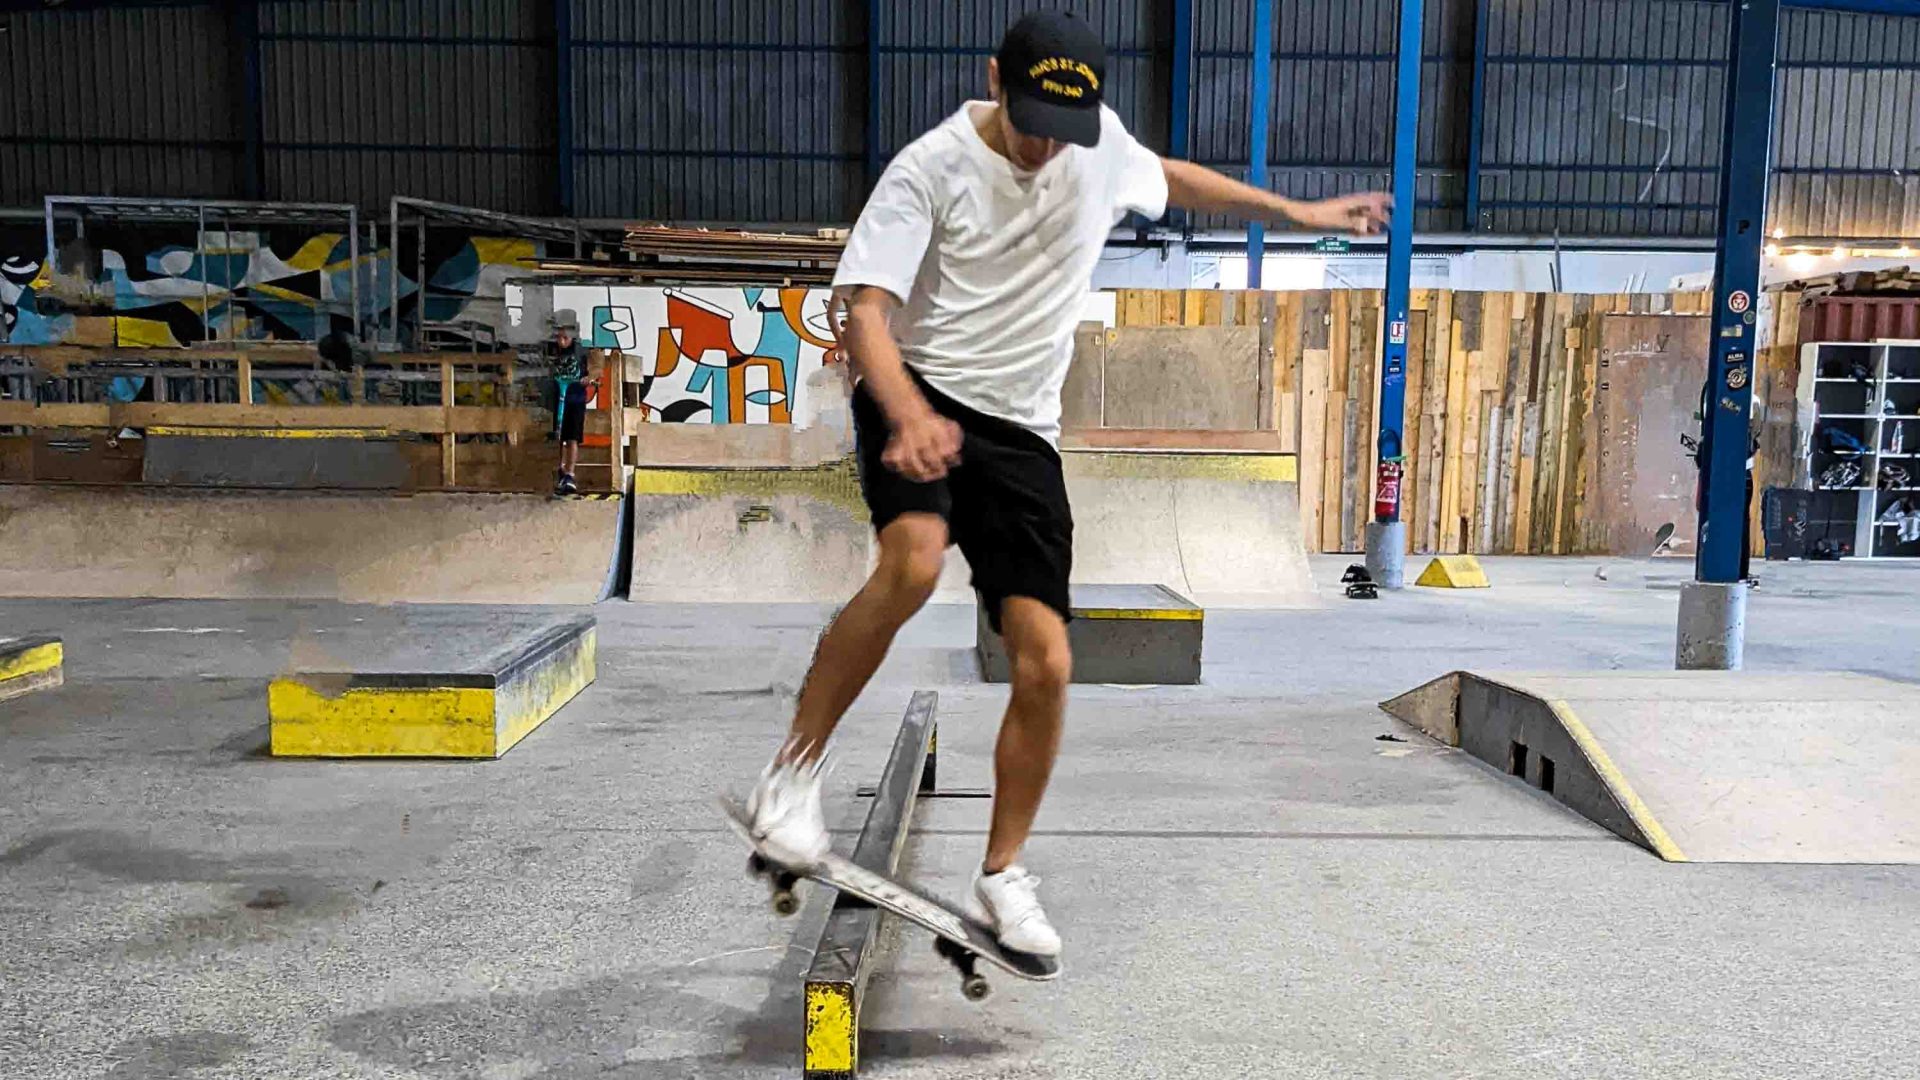 A person skates at Skatepark Hangar Darwin.